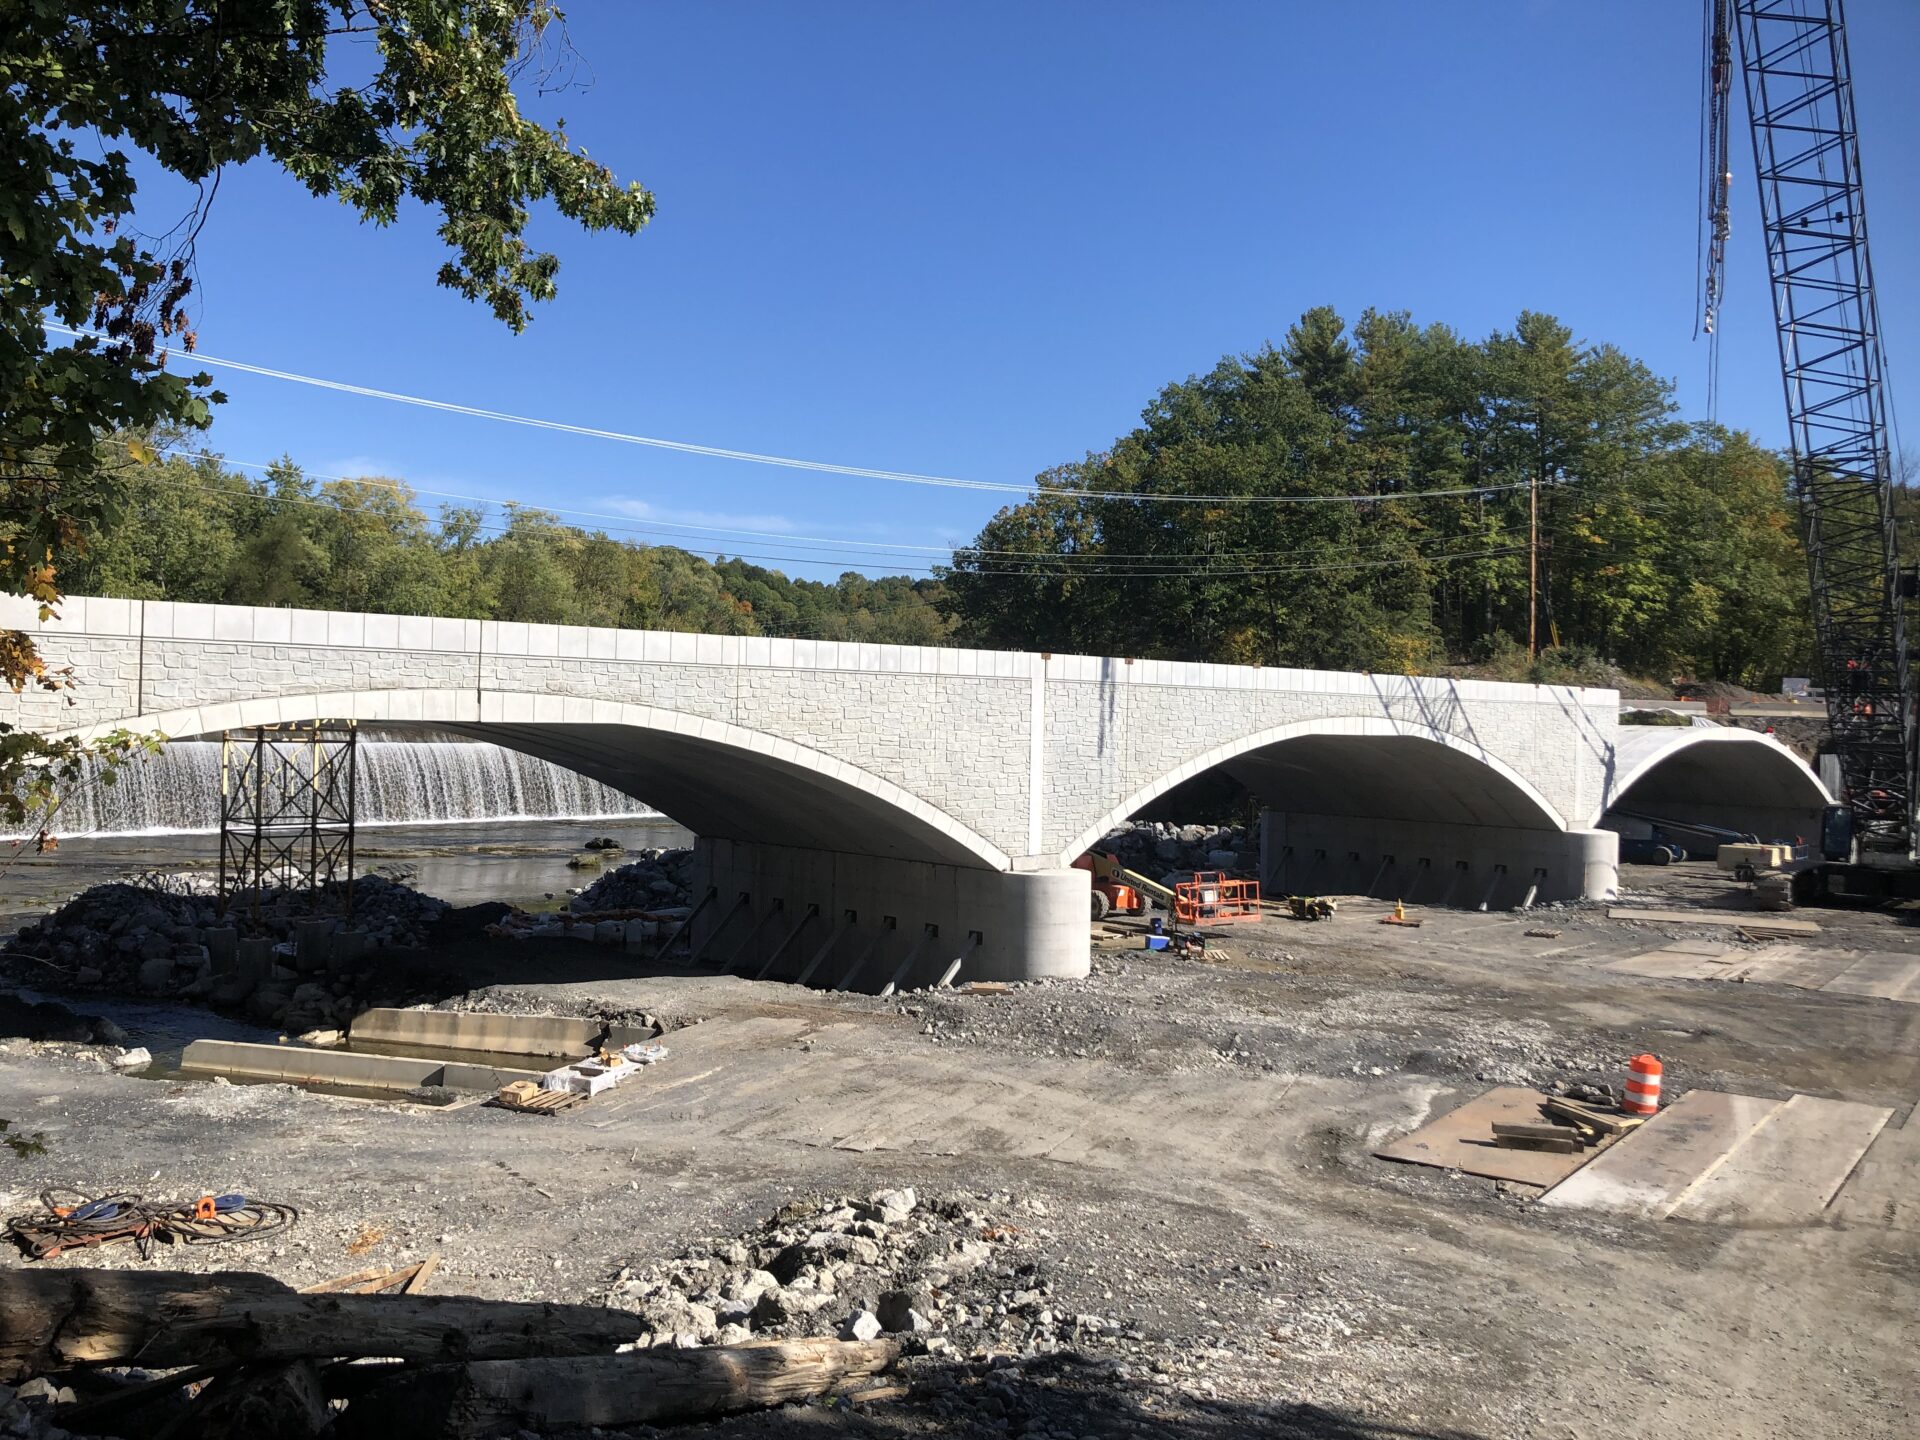 Precast Arch Bridge under construction over dry river bed